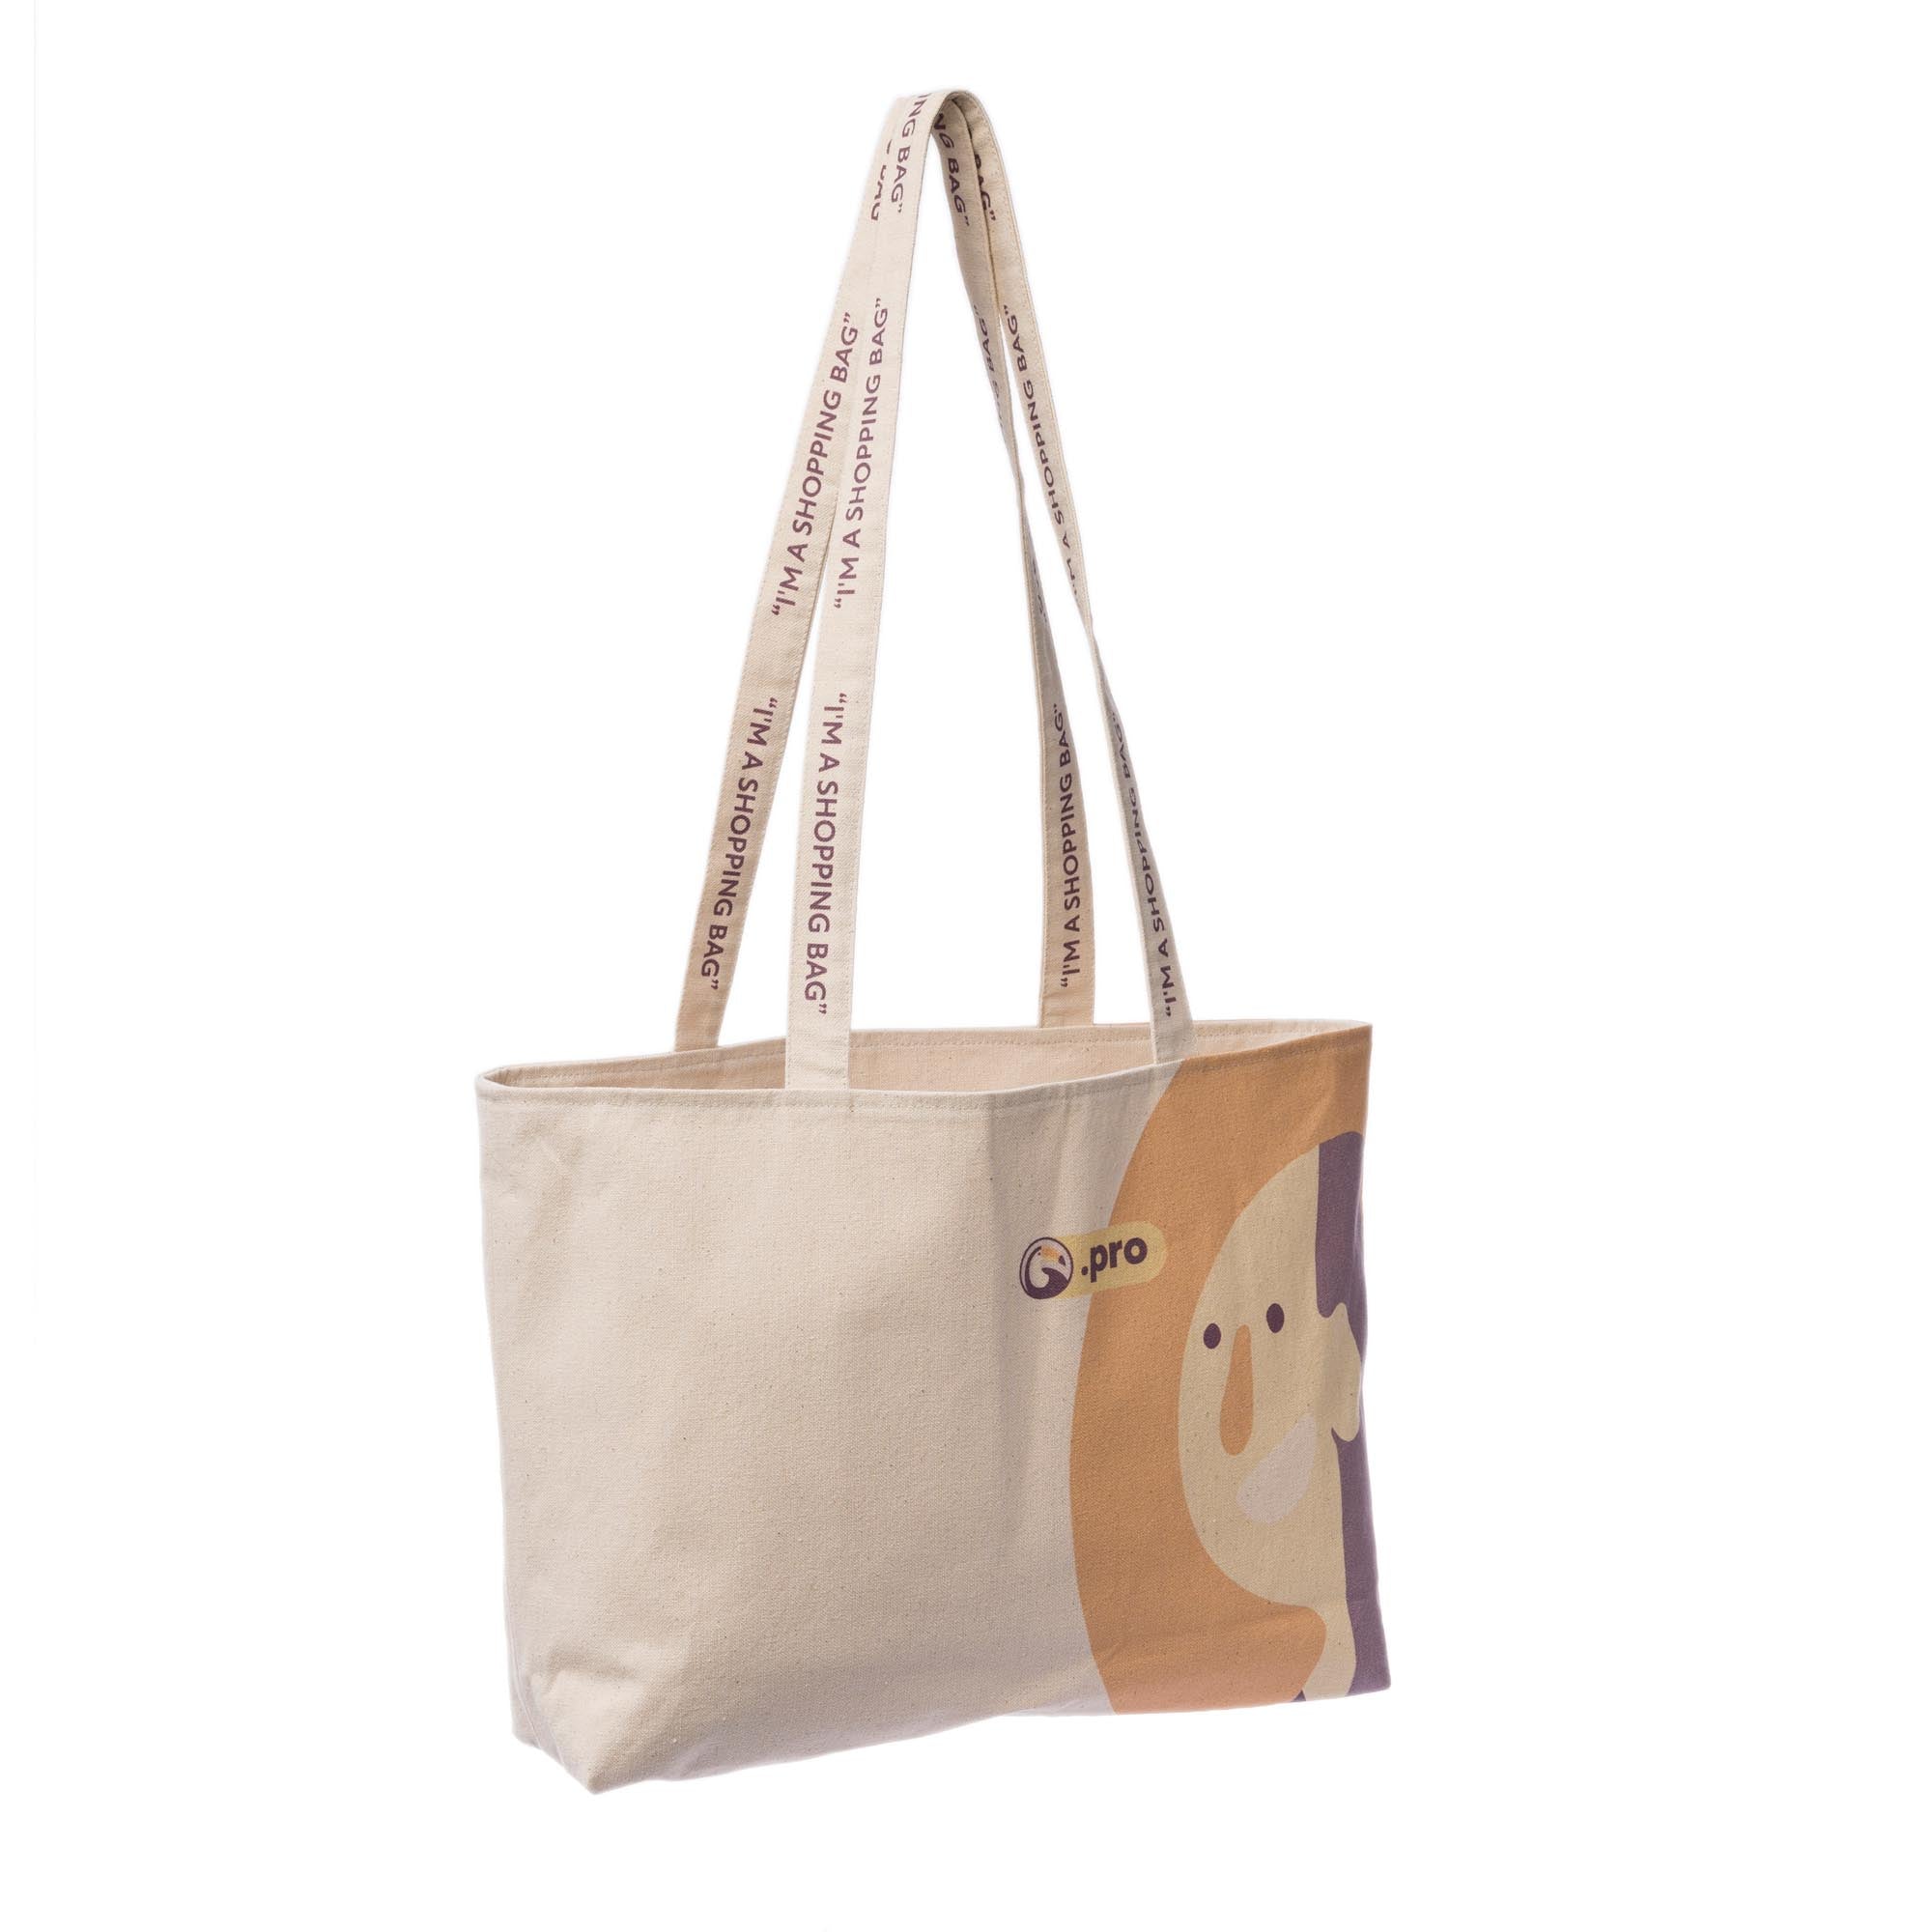 Bolsos Shopping Bag personalizables ✔️ Textilfy.pro